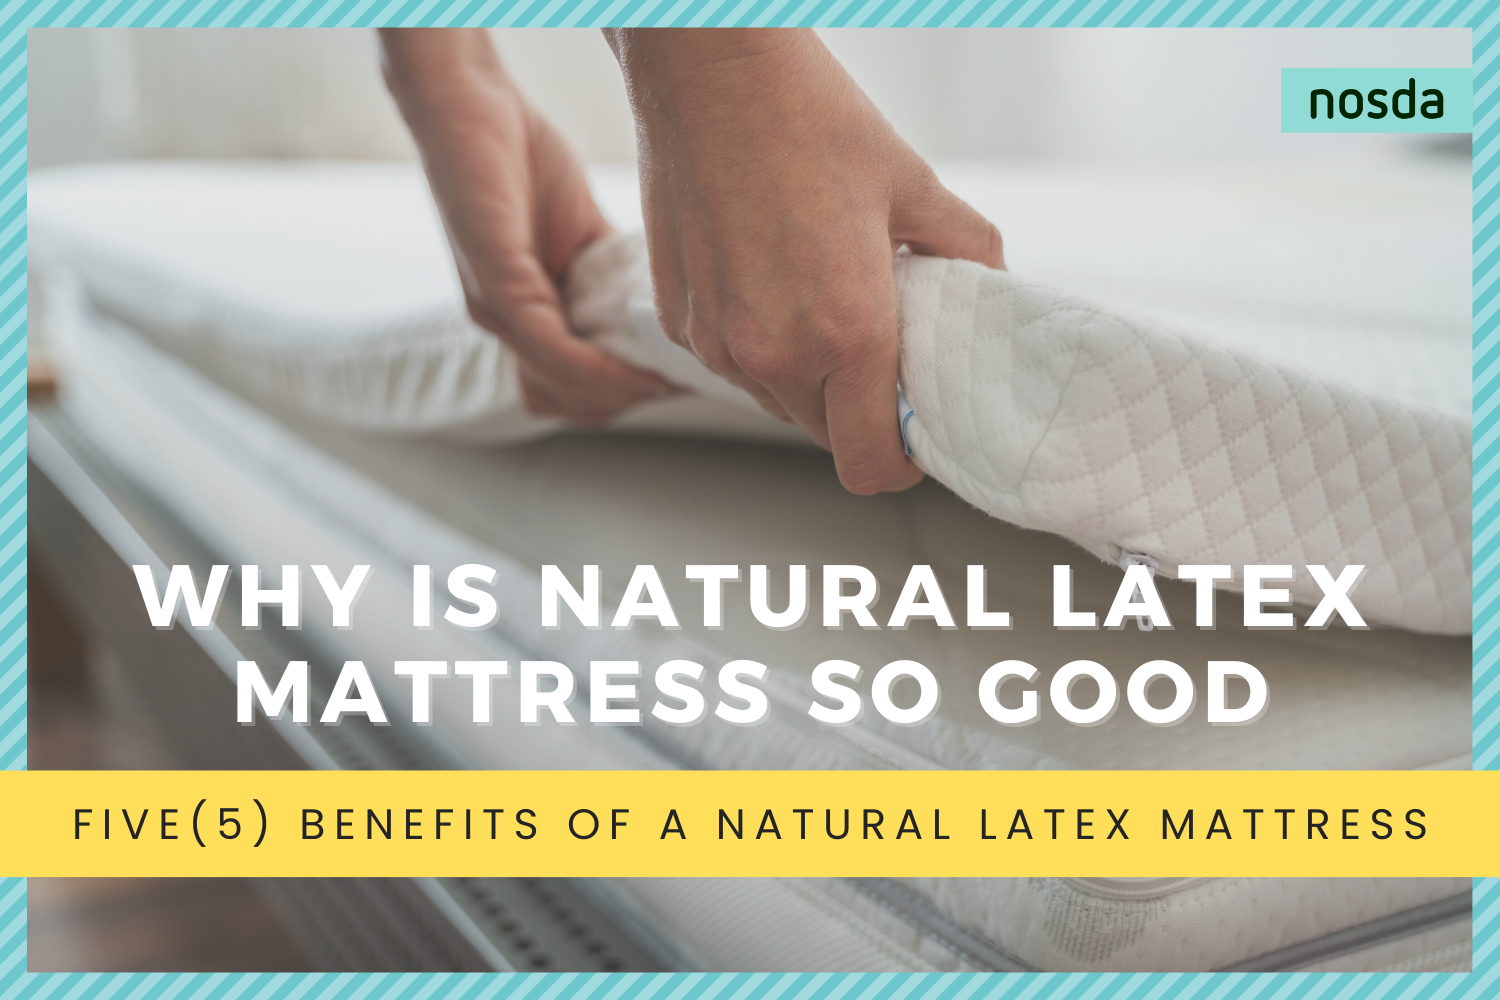 Benefits of a Natural Latex Mattress